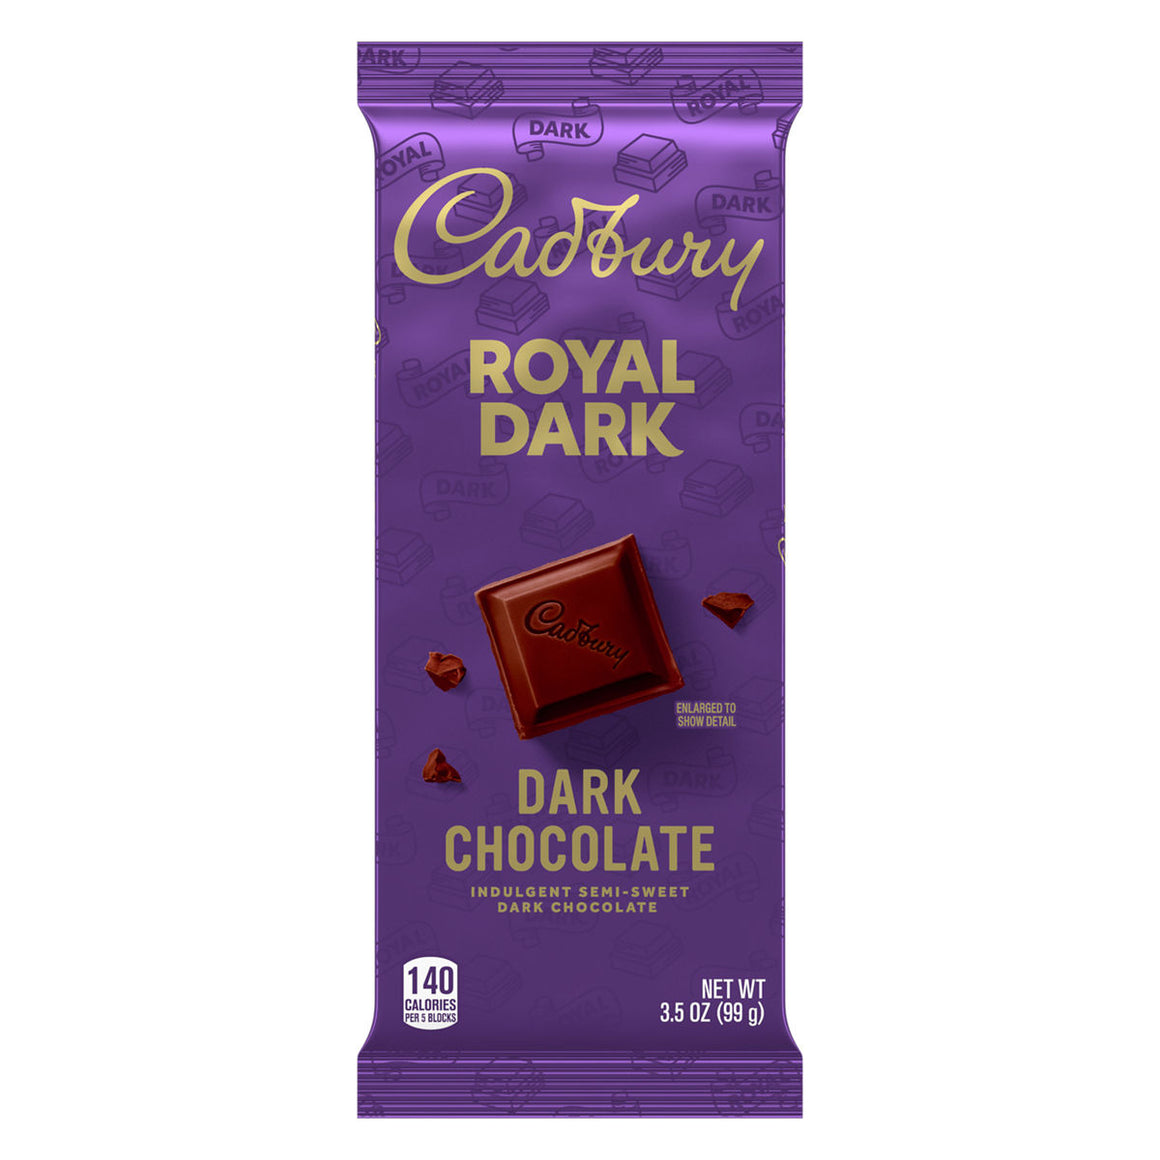 Cadbury Royal Dark Chocolate Bar 3.5 oz.